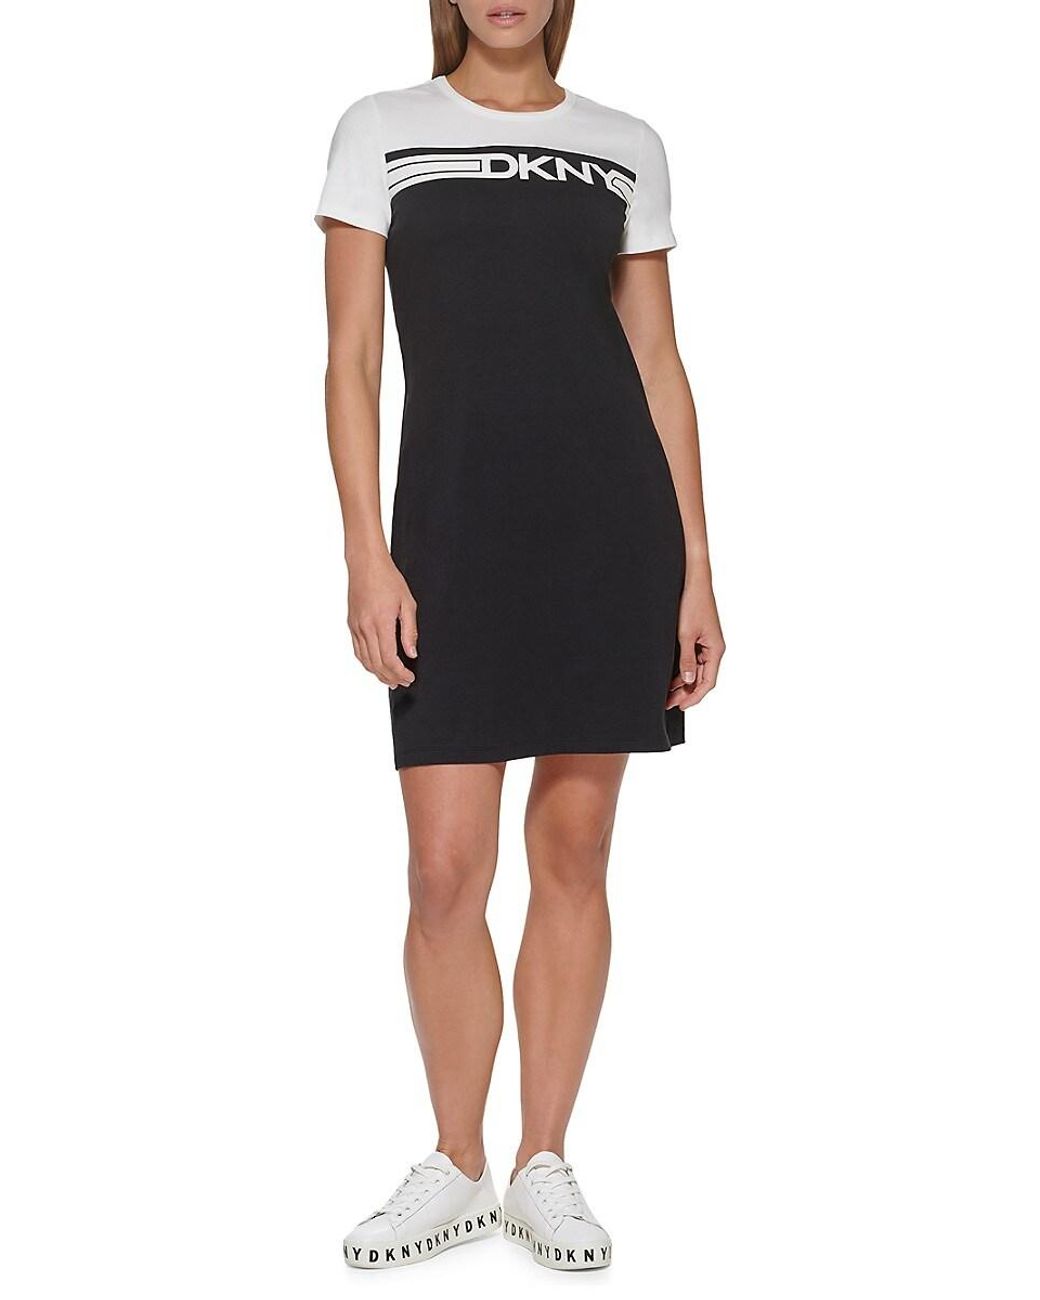 aflevering Logisch Soedan DKNY Women's Black Logo Colorblock T-shirt Dress